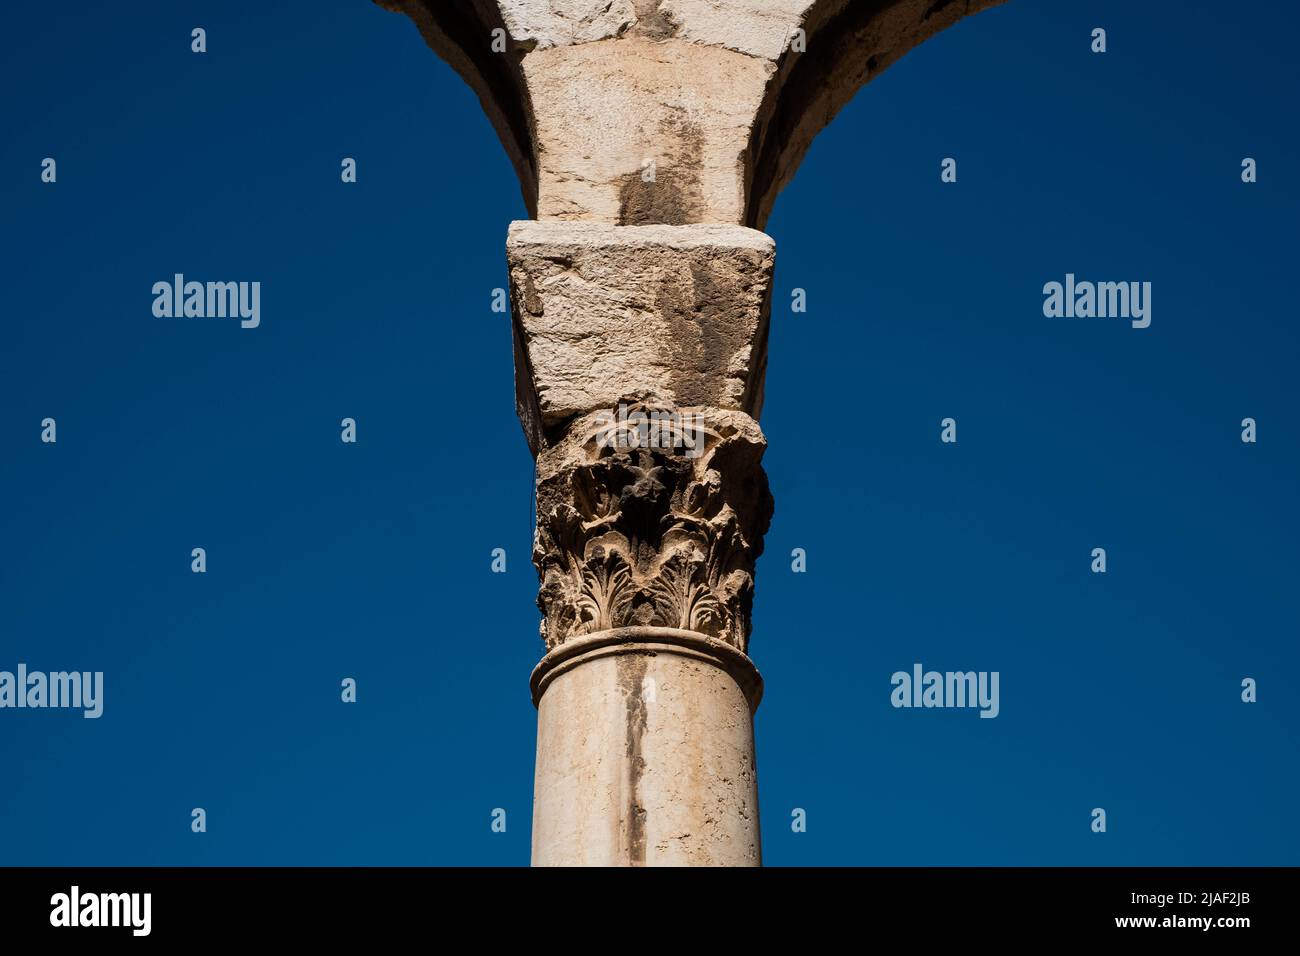 column closeup, historical architecture detail Stock Photo